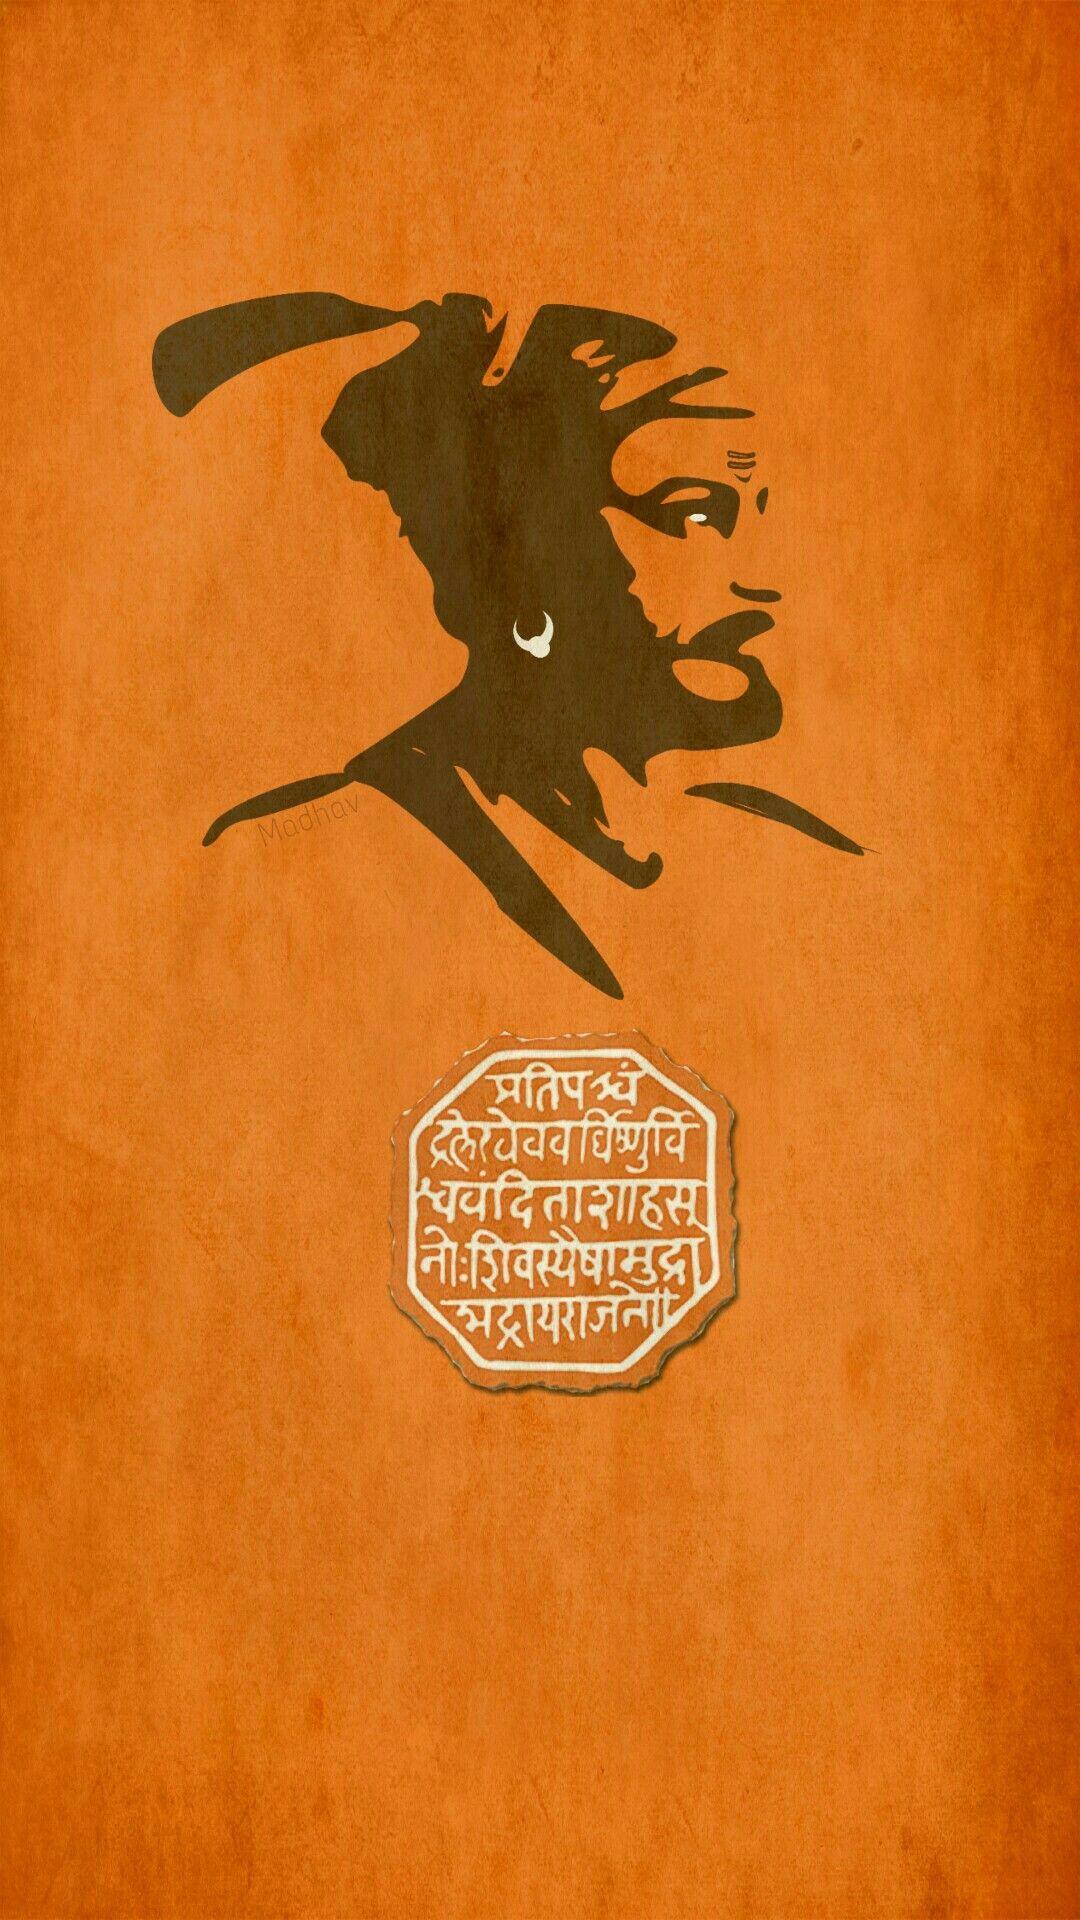 Shivaji Maharaj Mobile Wallpaper. Warriors wallpaper, Shivaji